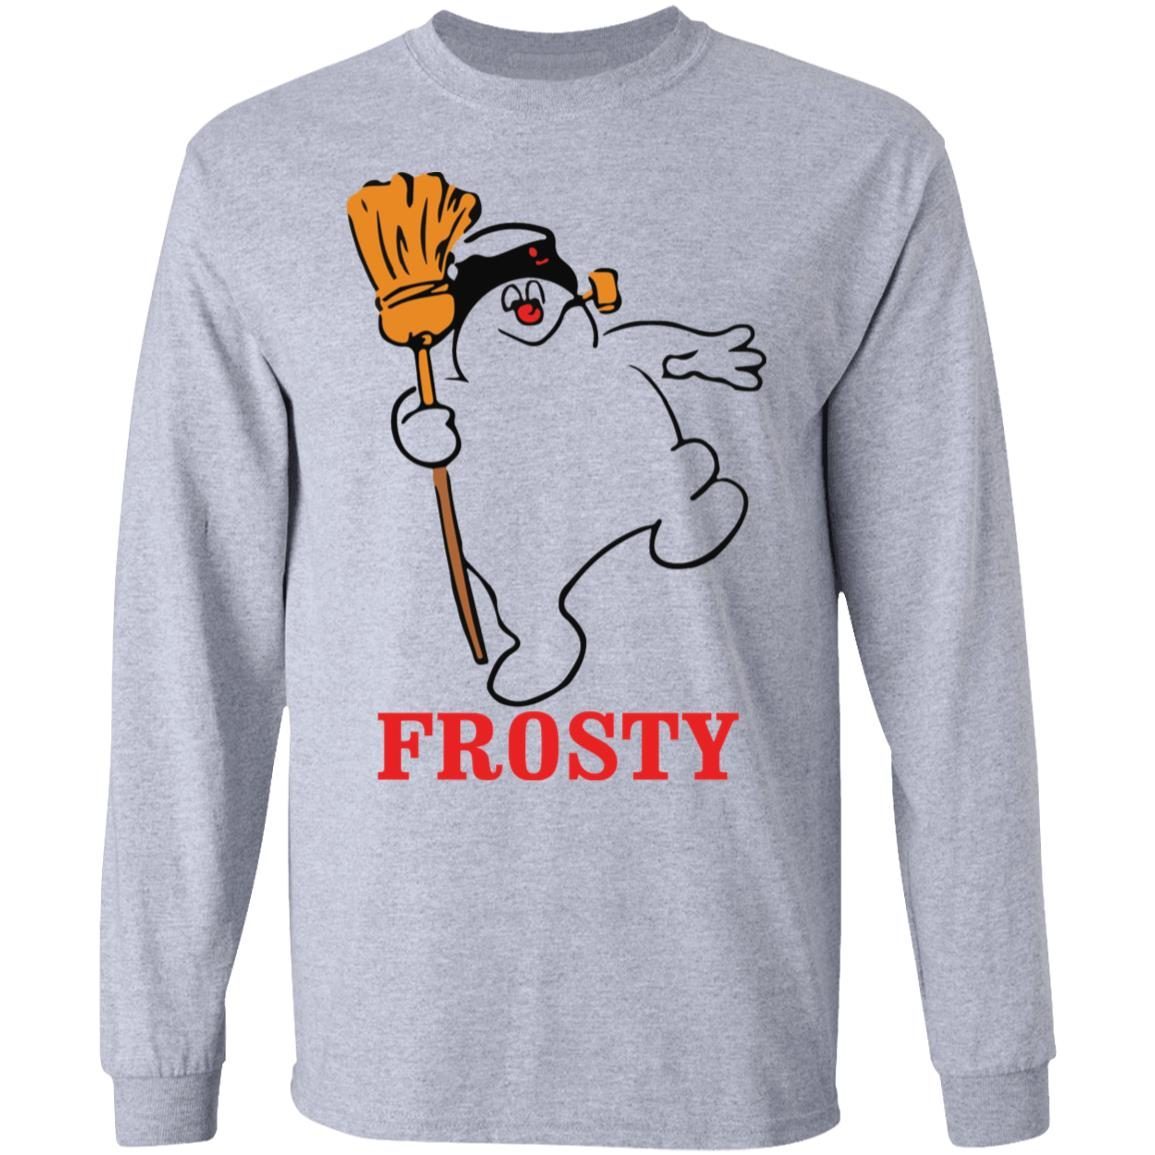 Snowman Frosty Christmas sweatshirt